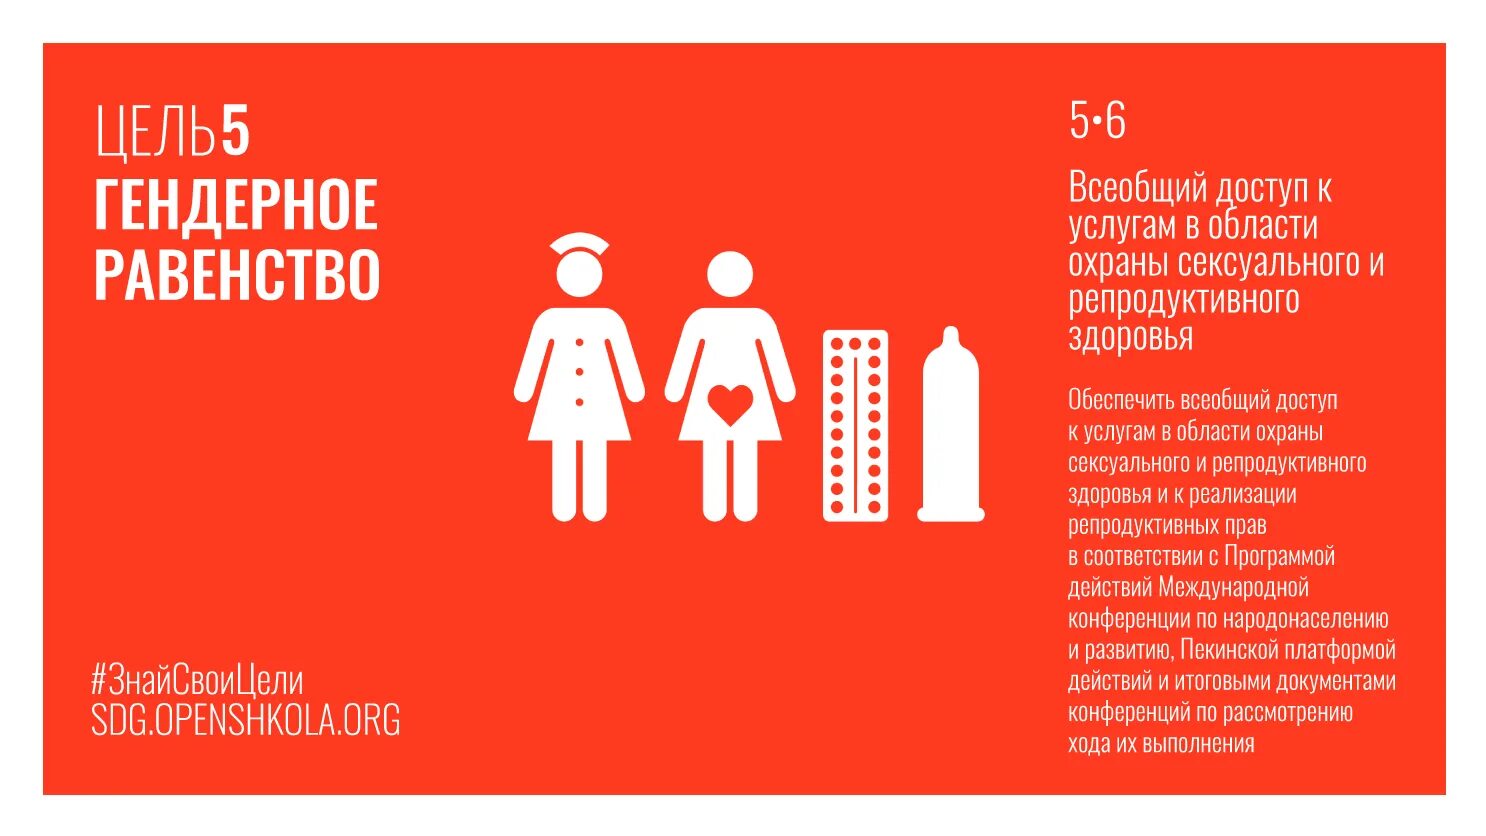 Цель устойчивого развития 5 гендерное равенство. ЦУР гендерное равенство. 5 Цель устойчивого развития. 5 Цель устойчивого развития ООН. Gender 1.16 5